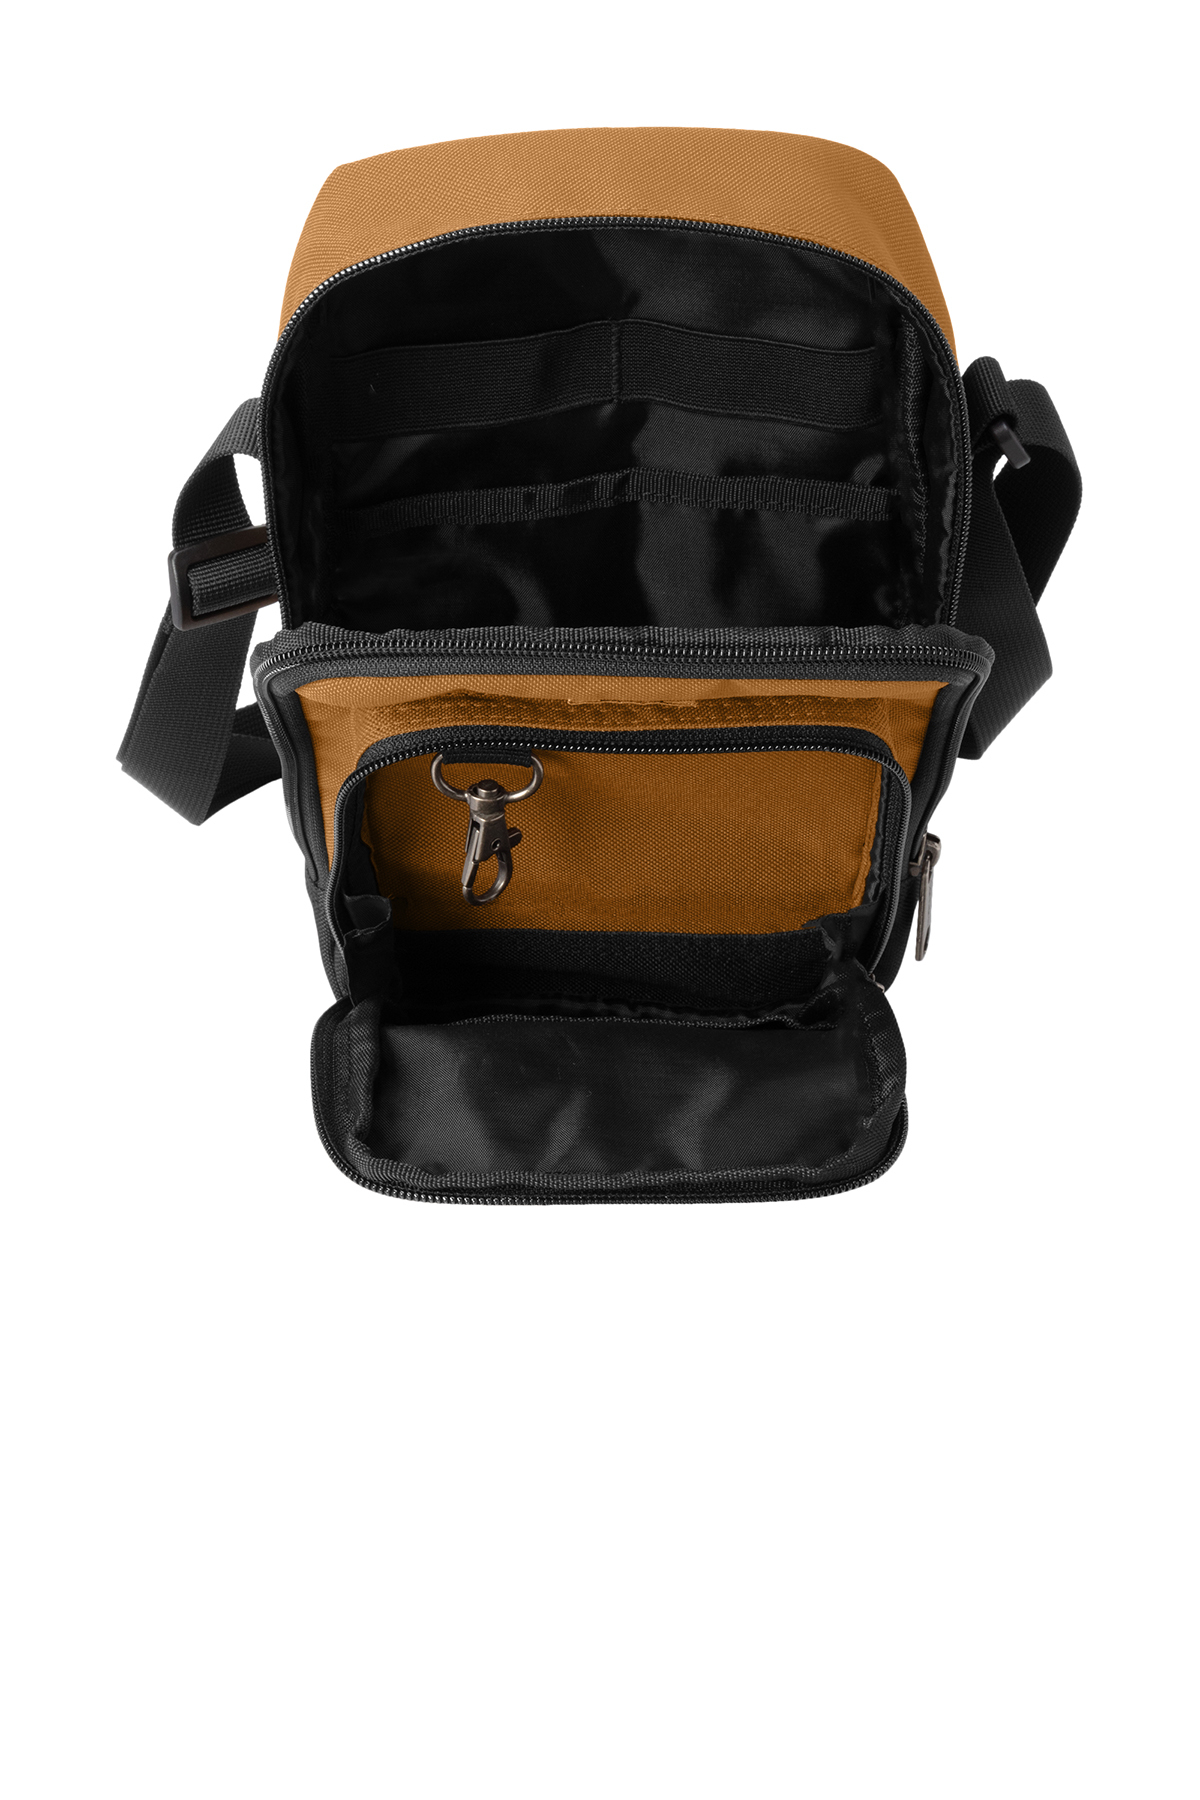 Crossbody Zip Bag, Rain Defender Gear